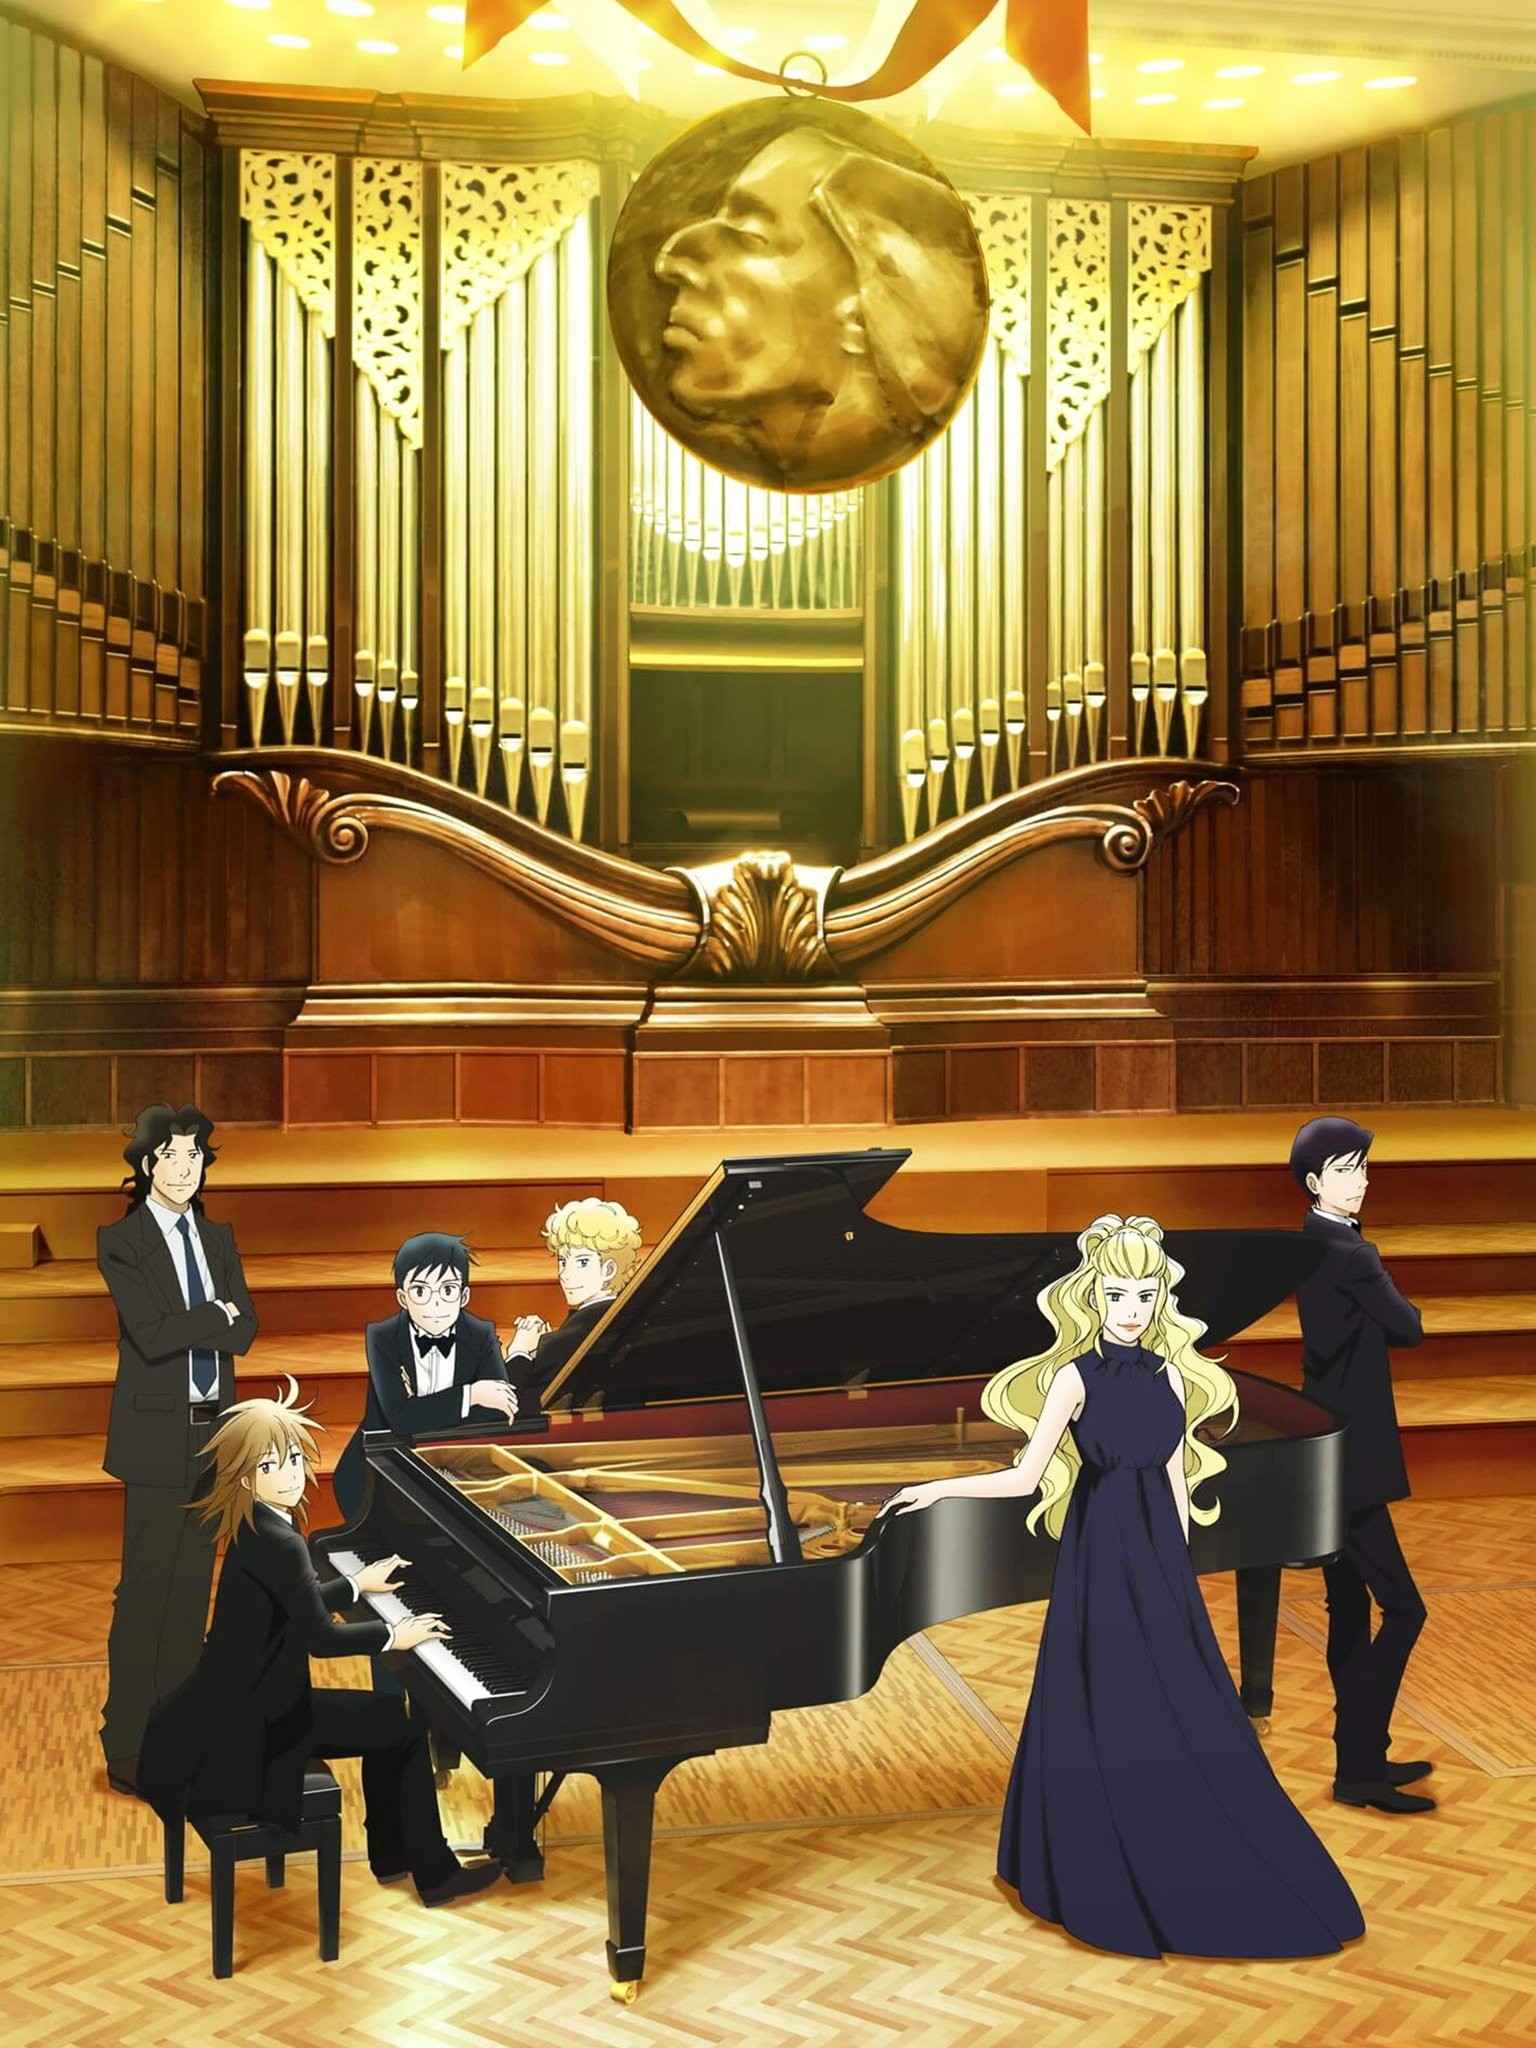 Qoo News] Coming TV anime Piano no Mori reveals visuals and cast